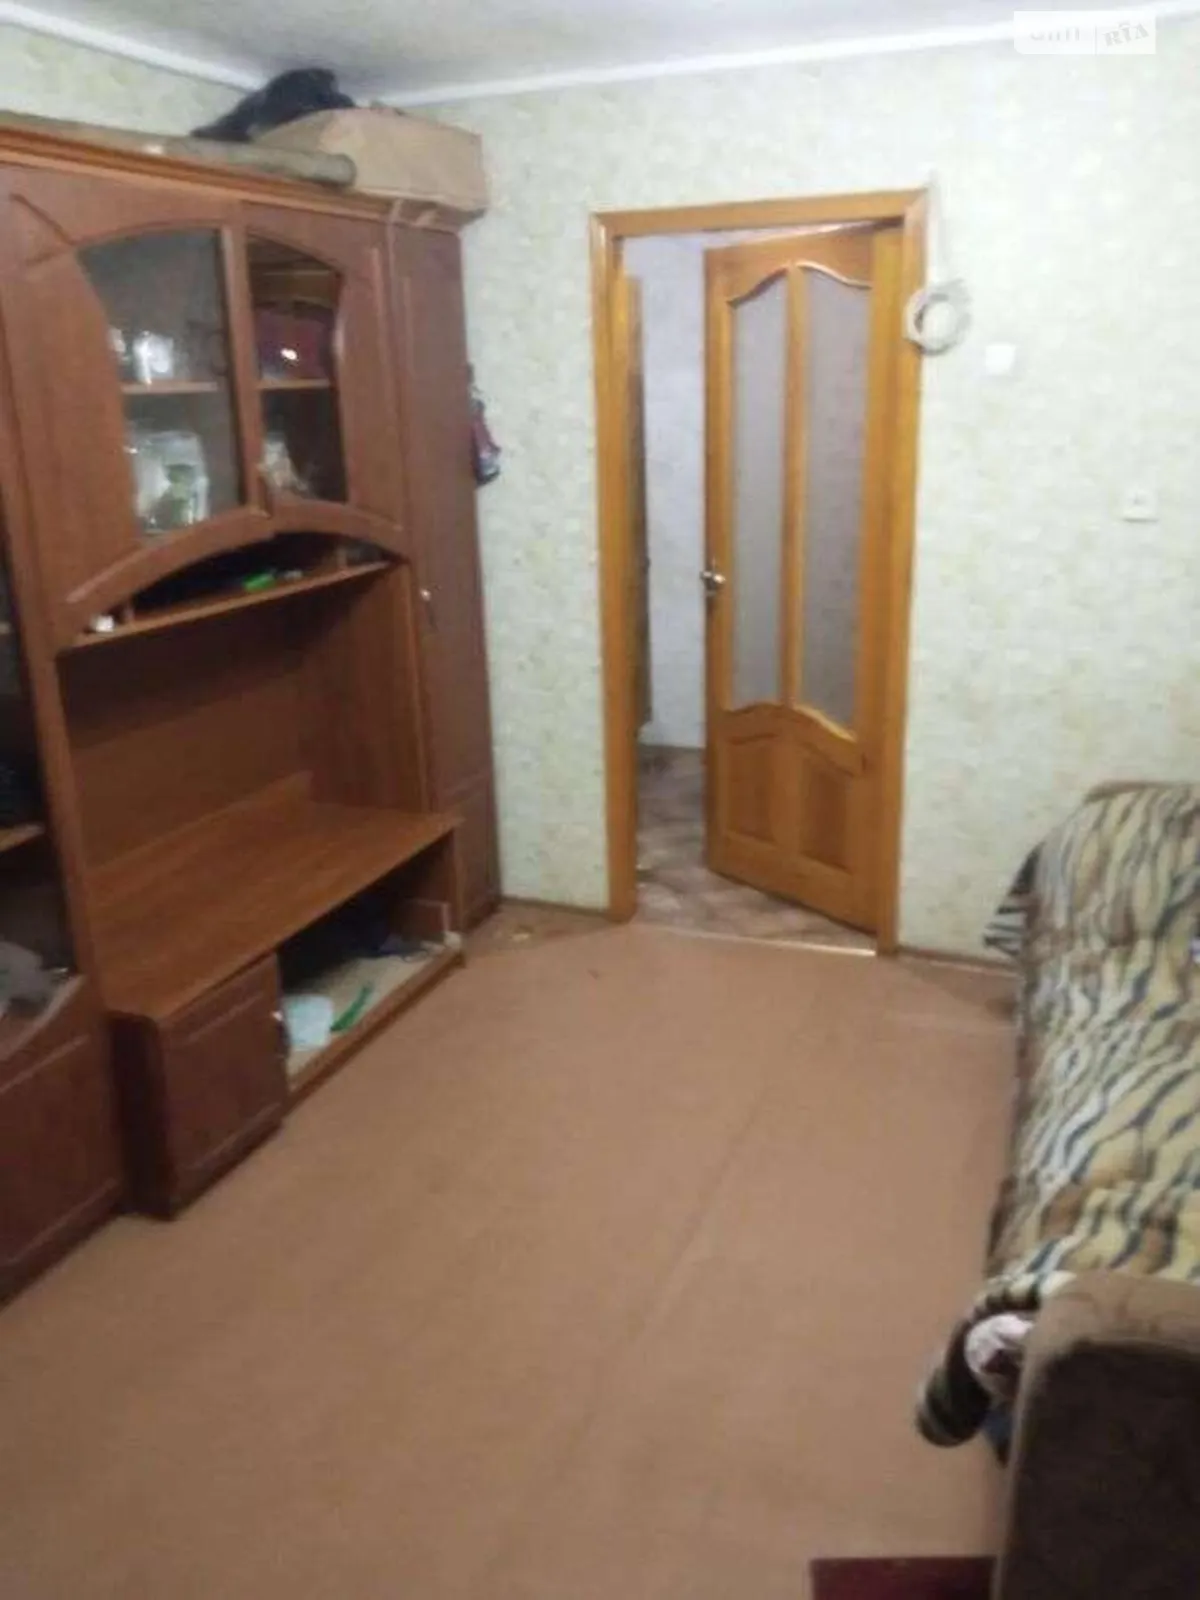 Продается комната 54 кв. м в Харькове - фото 2